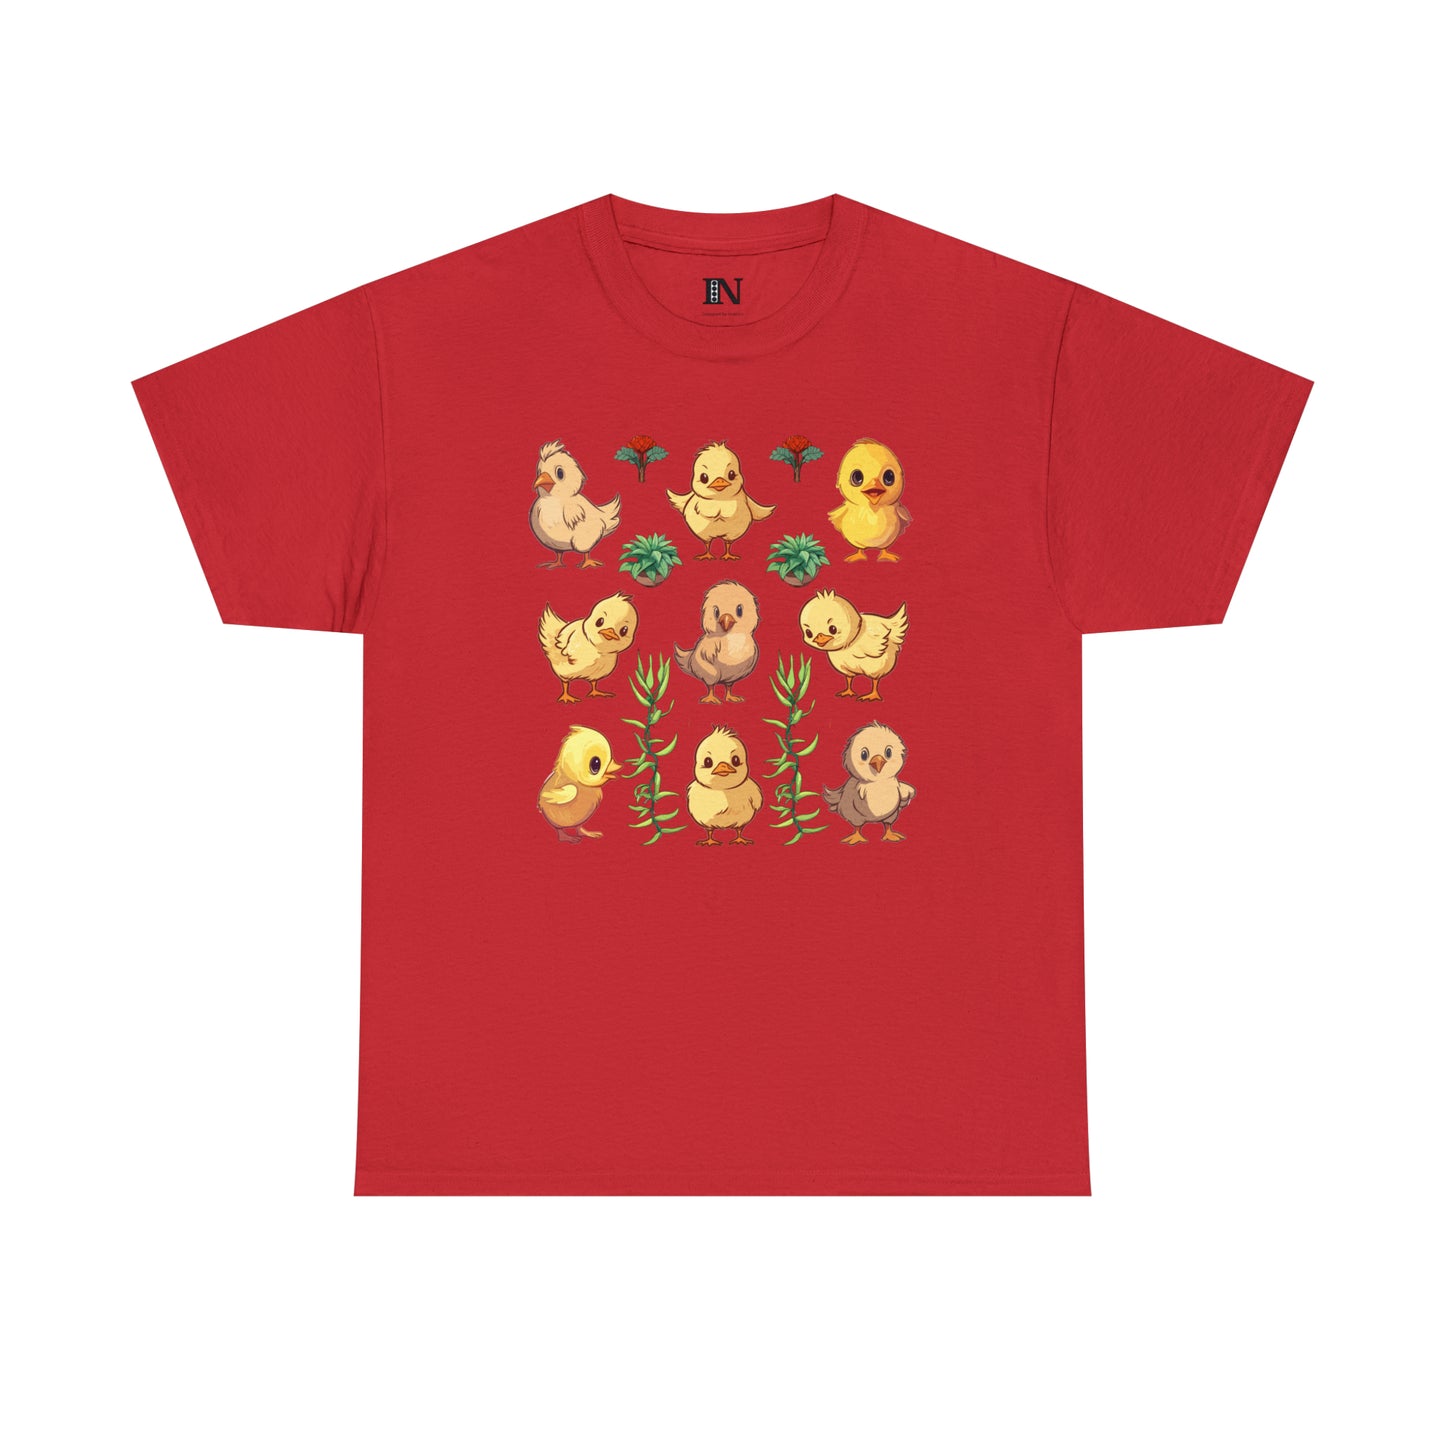 Baby Chickens T-Shirts, Chicken Shirt, Funny Chicken Shirt, Cute Chicken Shirt, Chick Shirt, Cartoon Chick Shirt, Chicken Lover Shirt